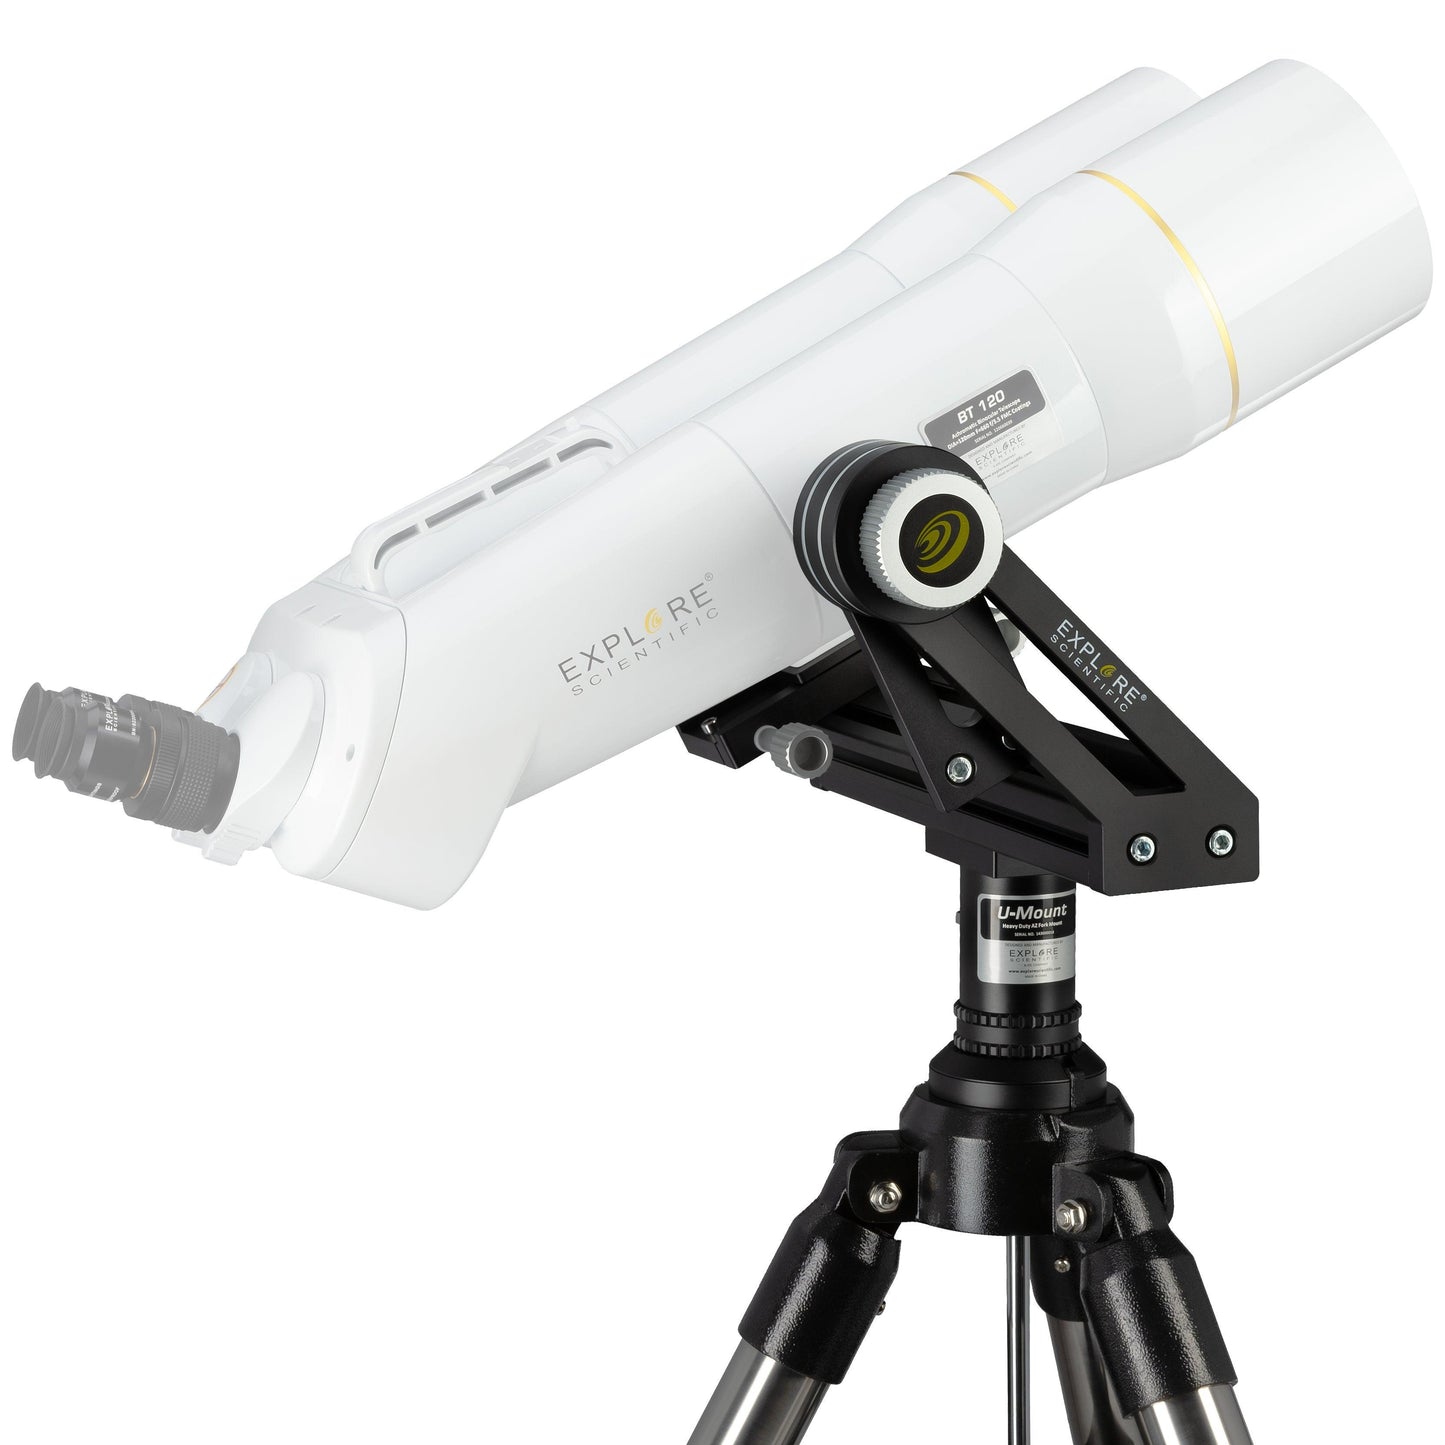 U-mount with tripod for large binoculars - Silverlight Optics